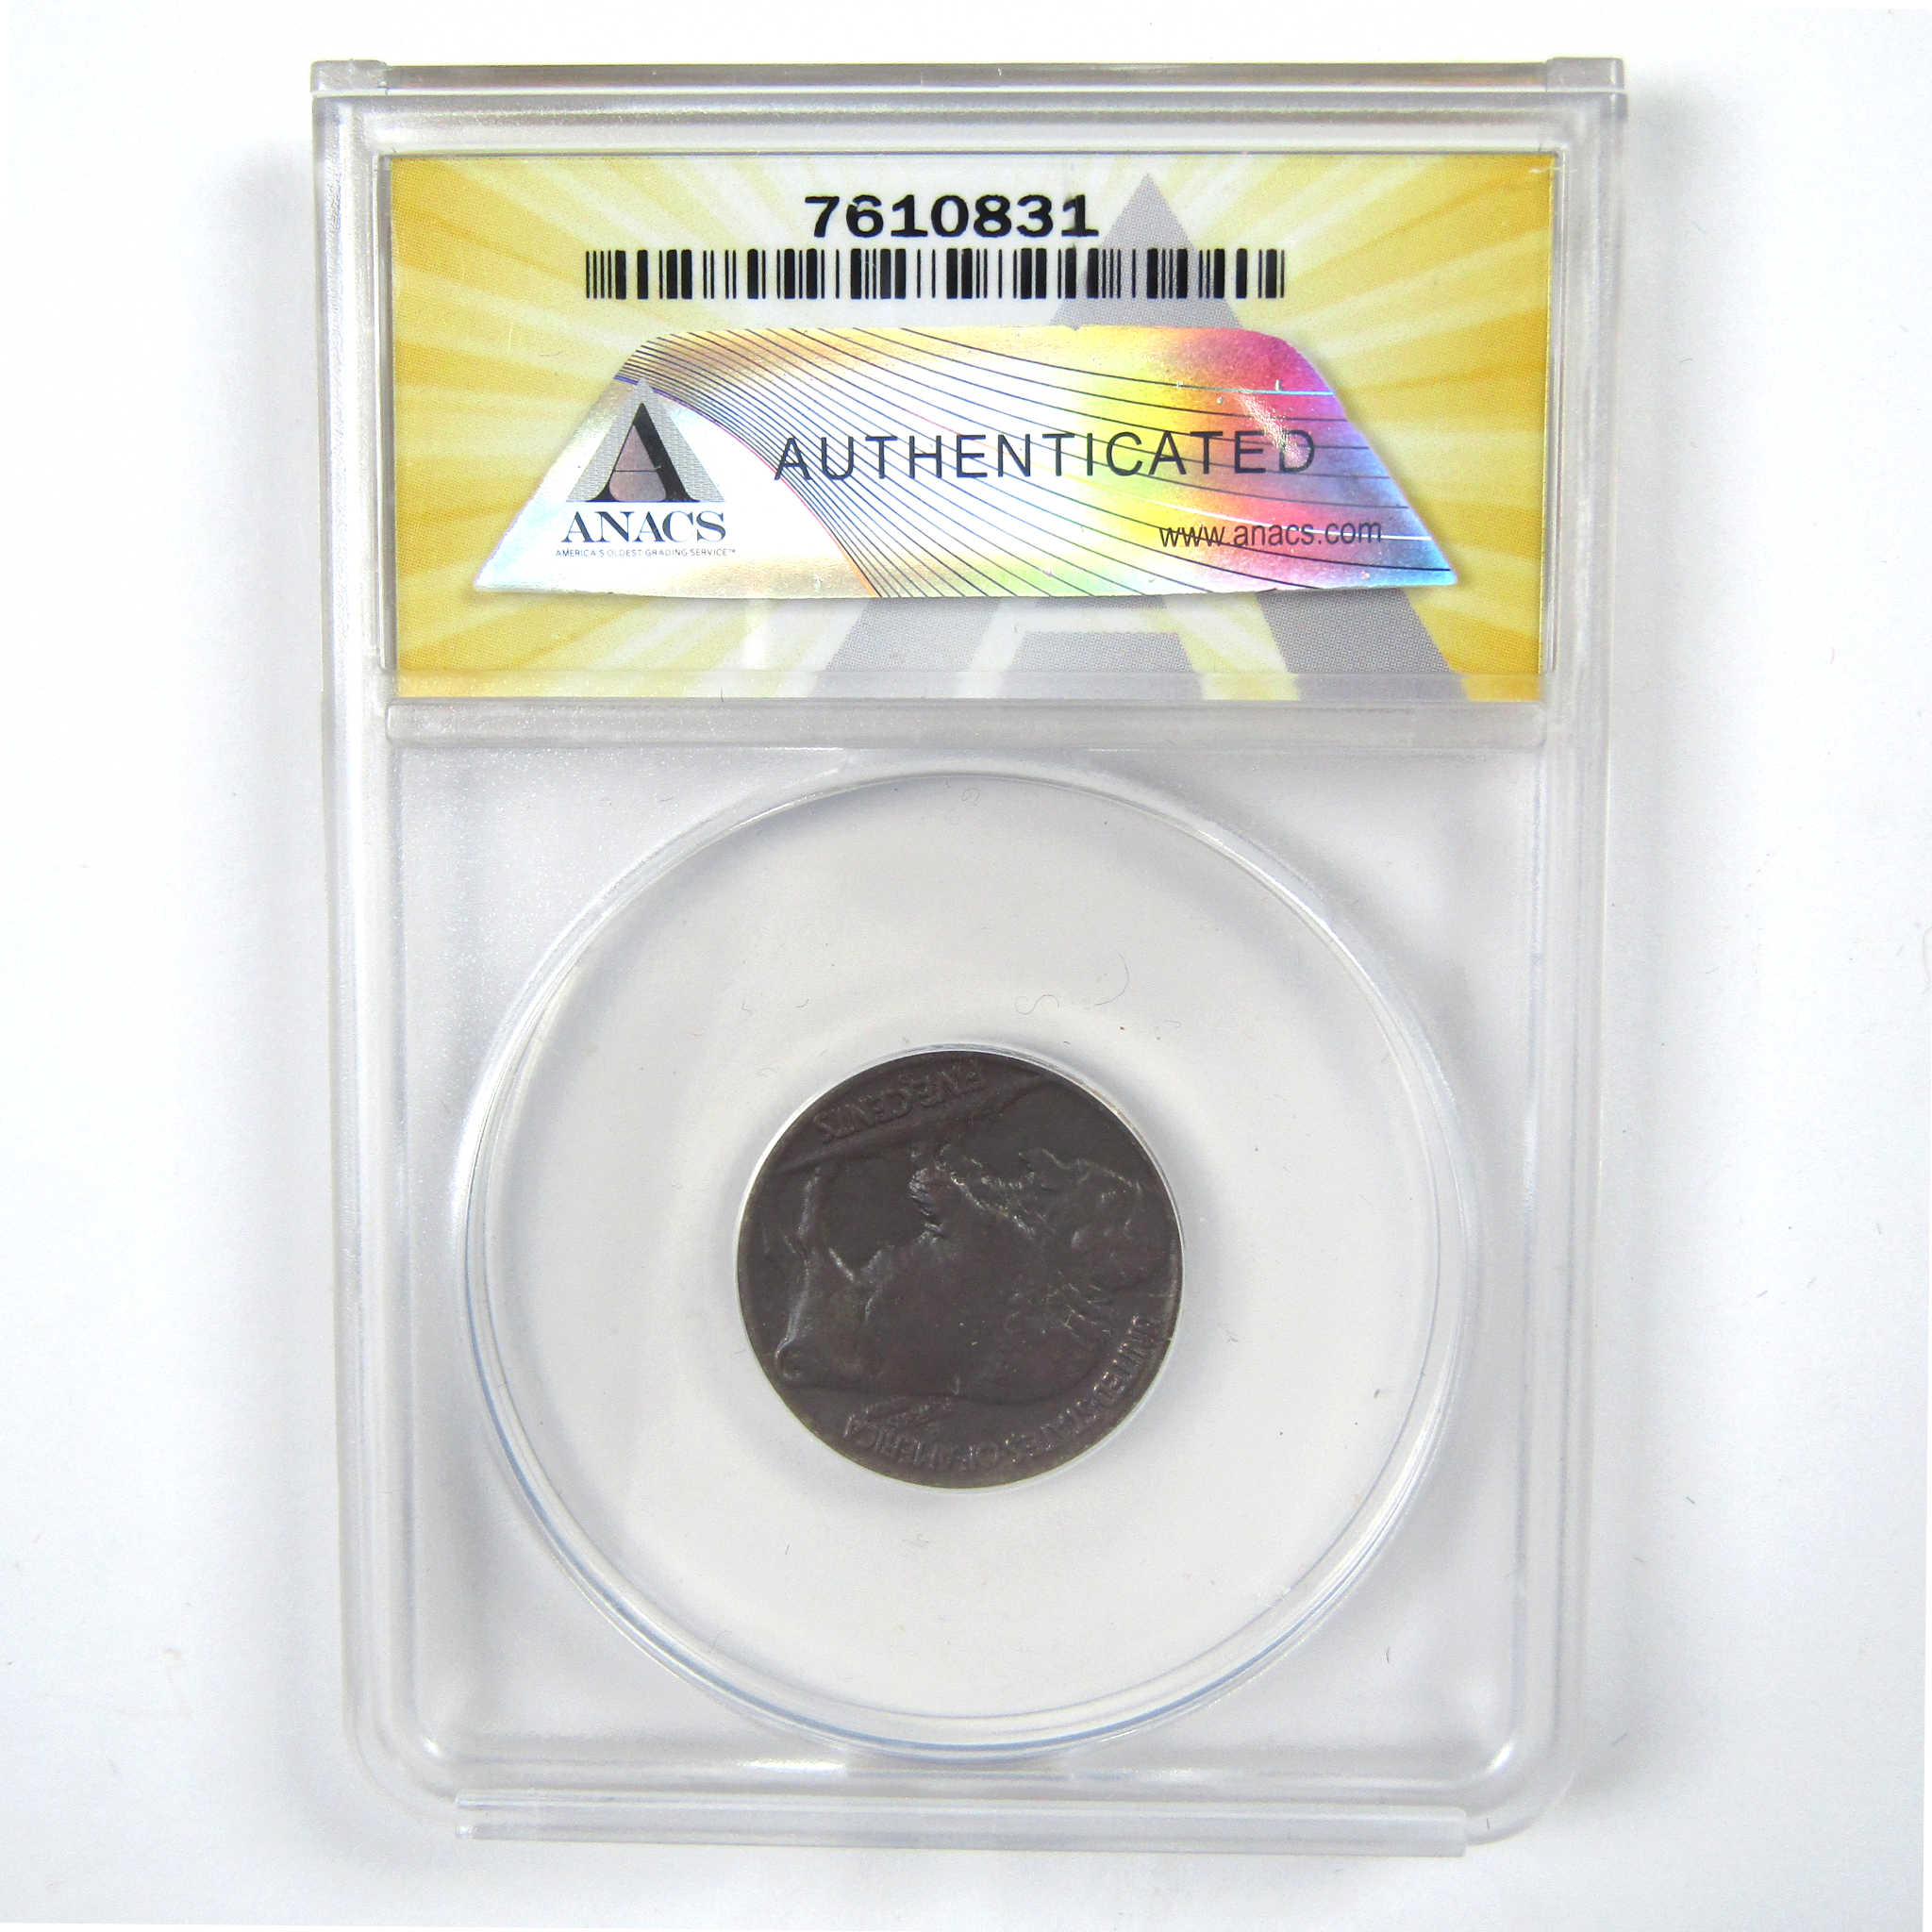 1914 D Indian Head Buffalo Nickel VF 20 Details ANACS SKU:CPC7189